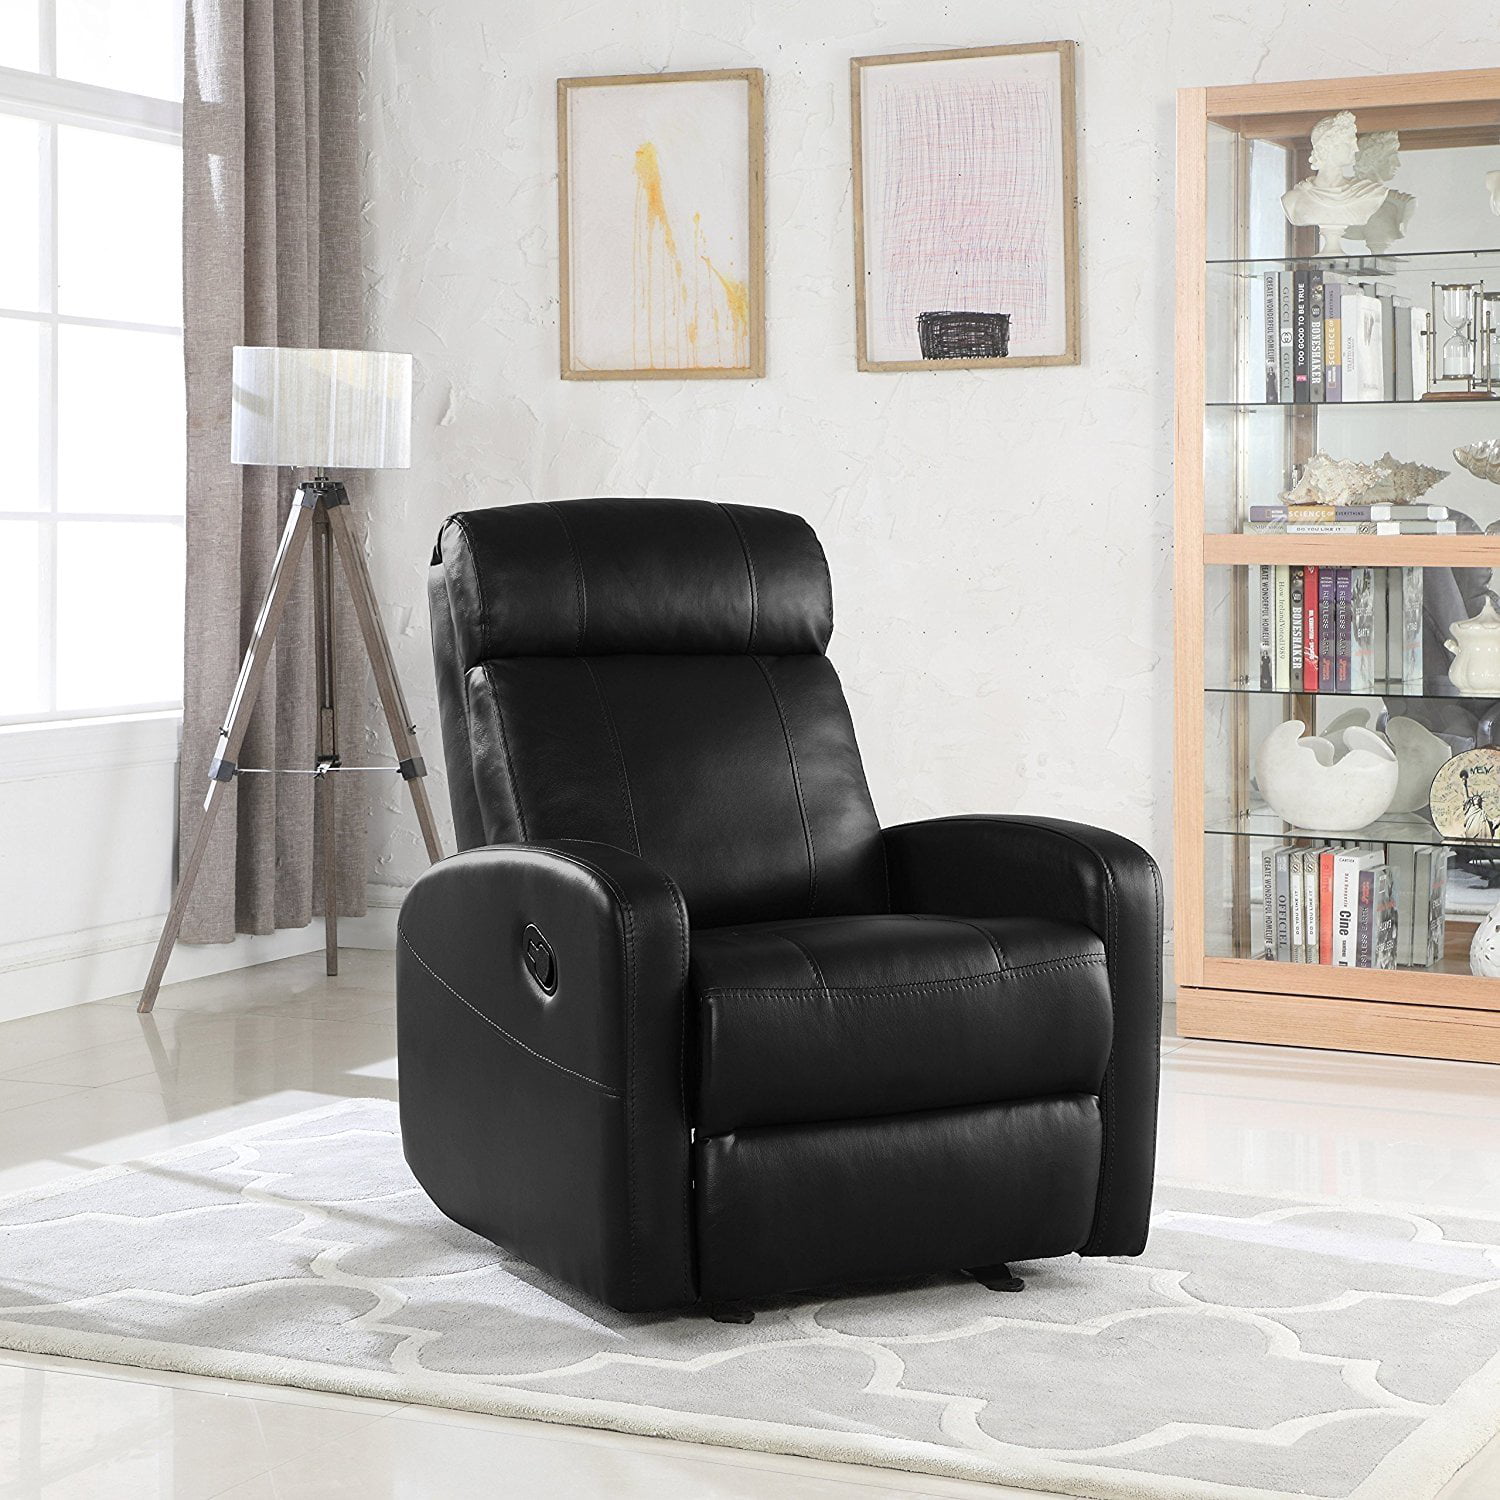 Overstuffed Sleek Modern Living Room Faux Leather Recliner Chair